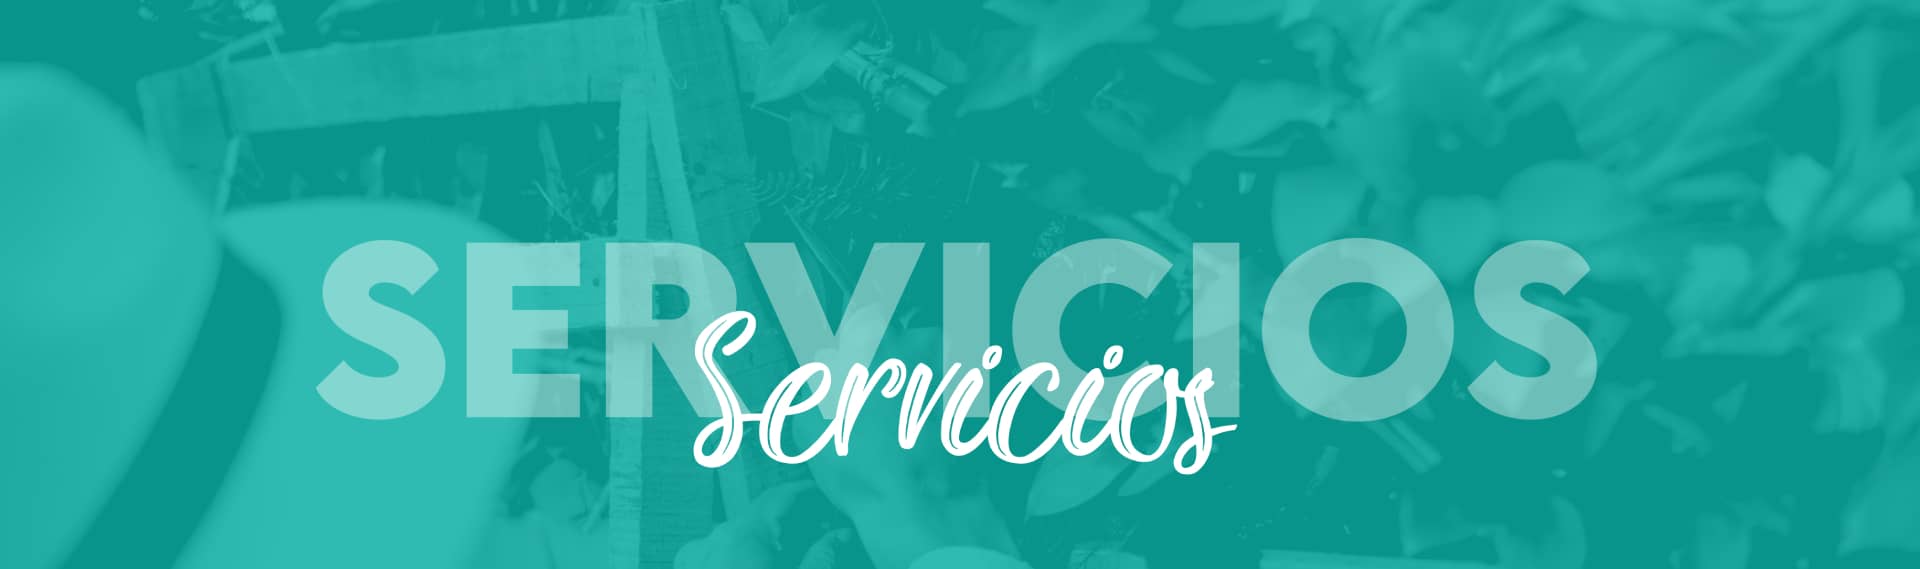 Banner Servicios - Corporacion de Silleteros